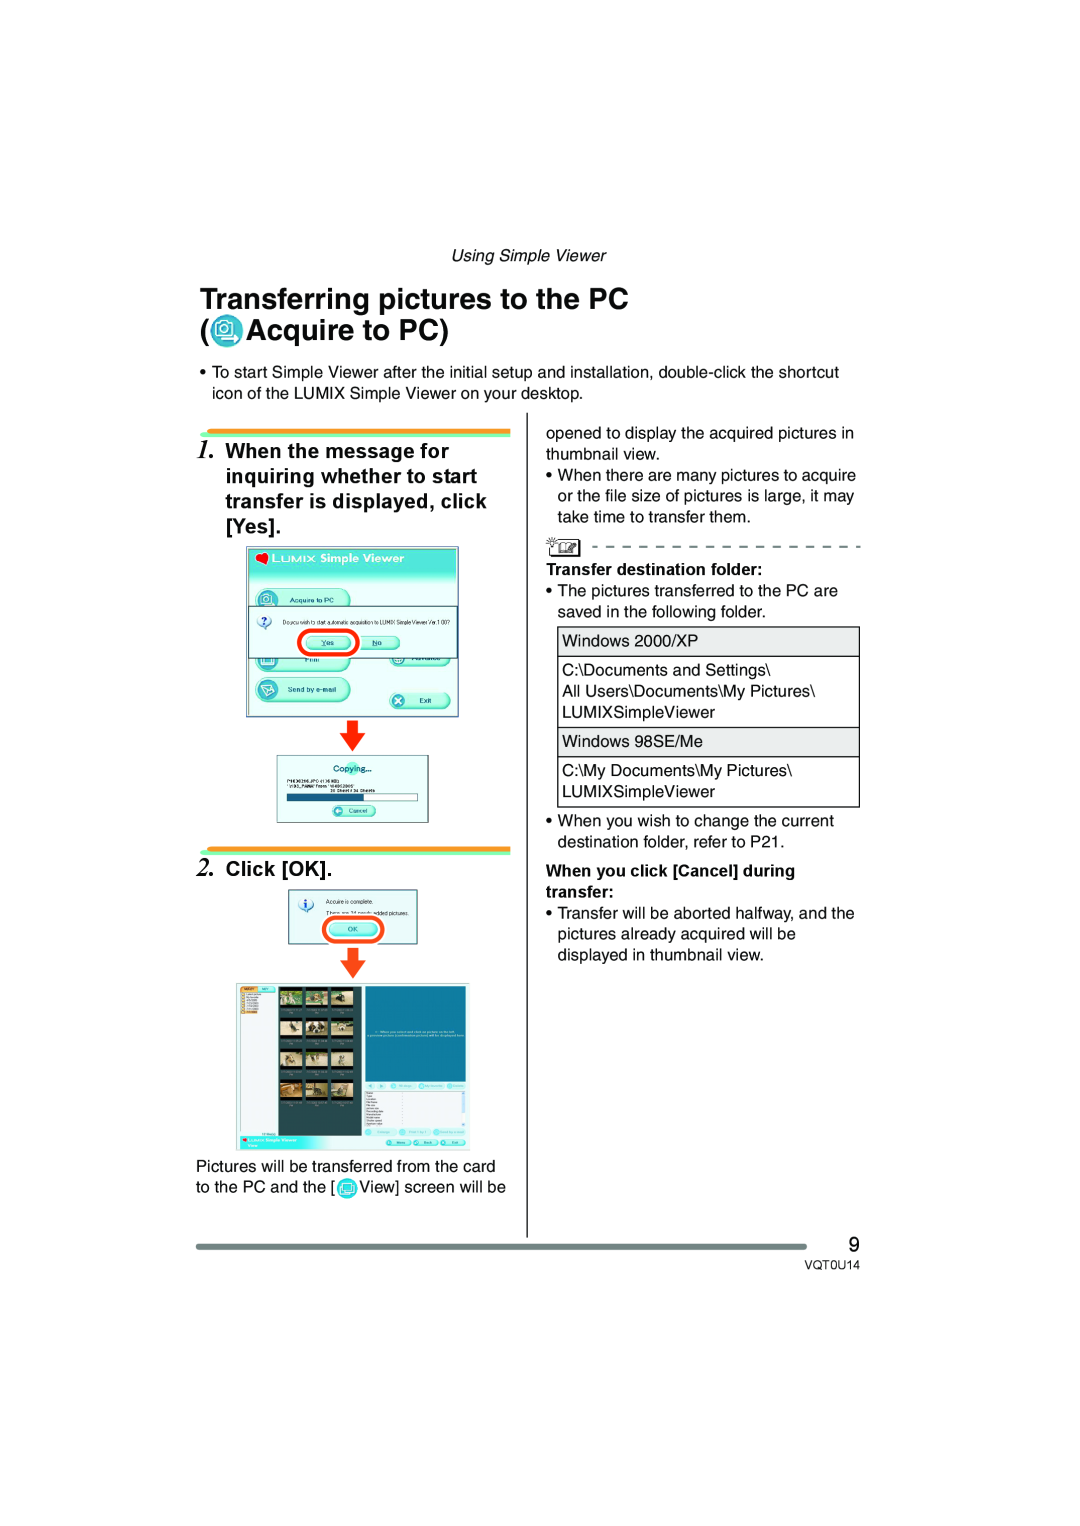 Panasonic VQT0U14 Transferring pictures to the PC Acquire to PC, Click OK, Transfer destination folder 